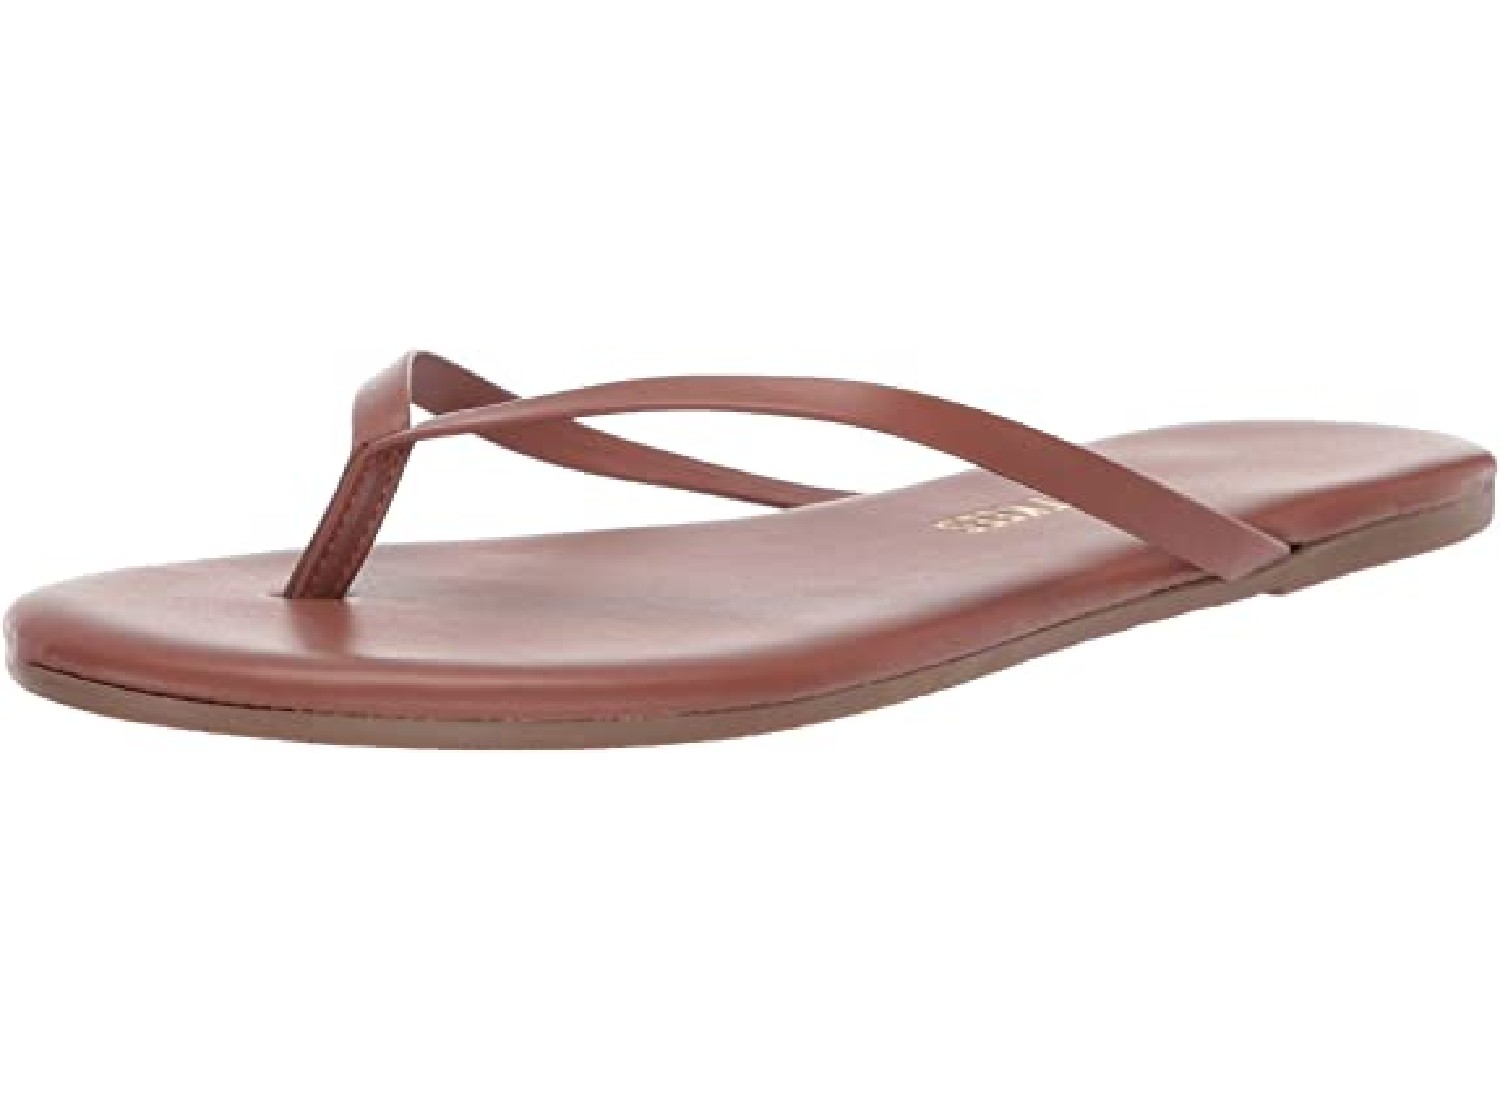 A plain rawhide sandal.